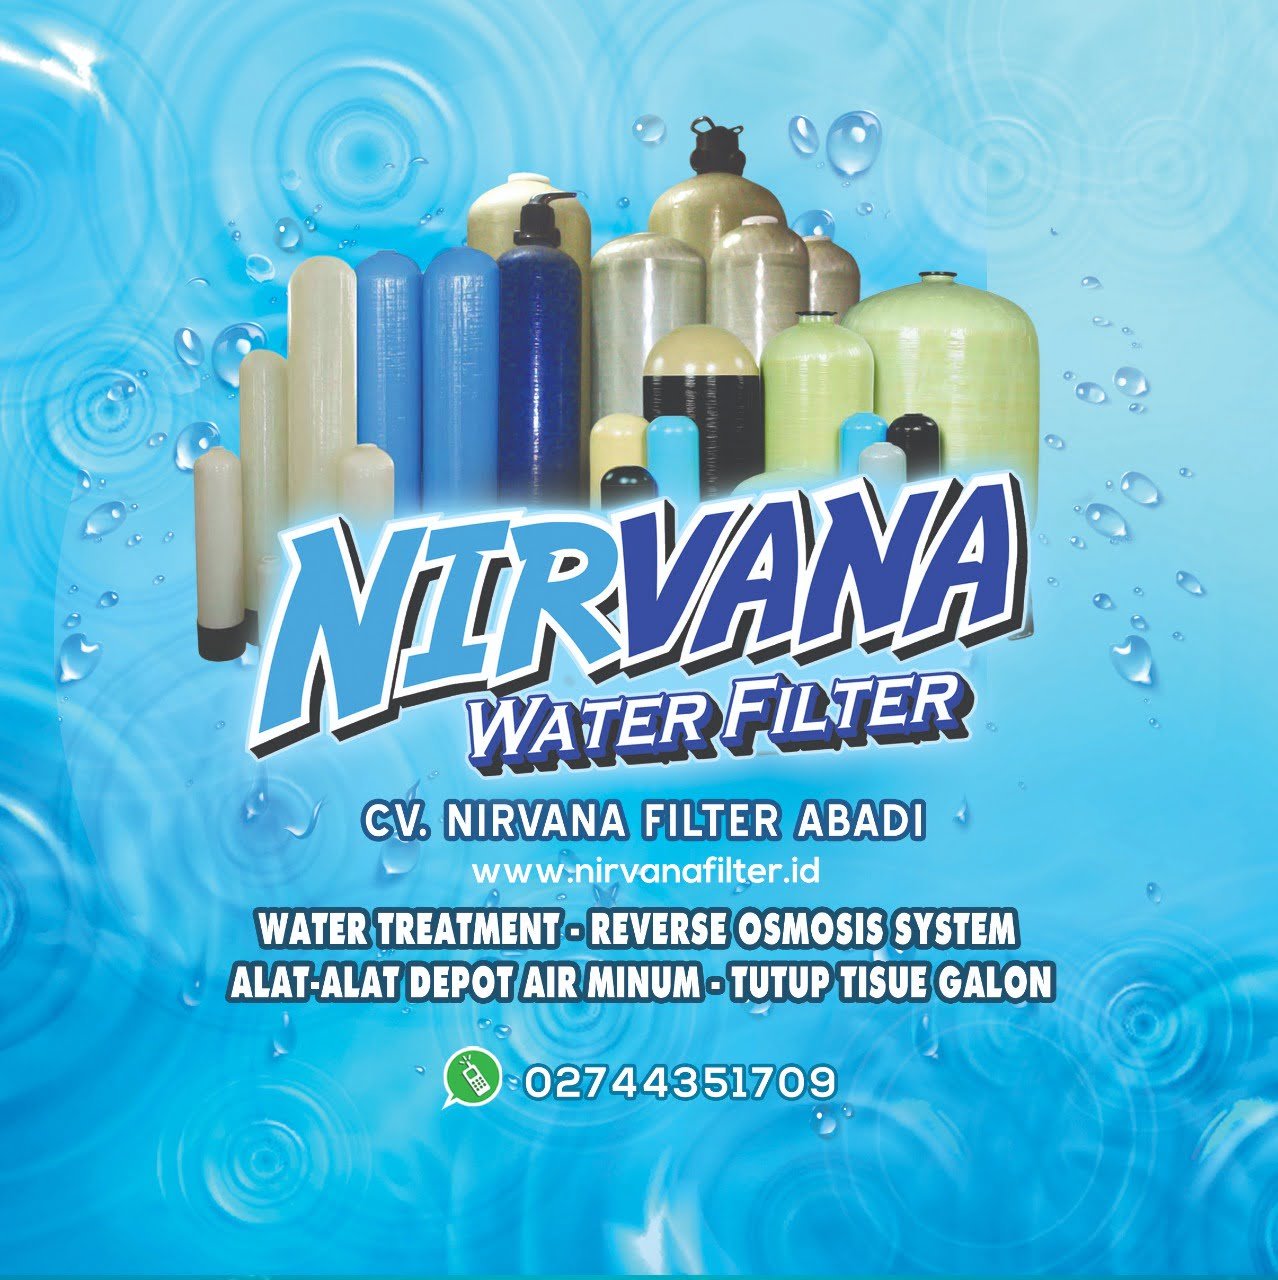 Nirvana Filter Abadi